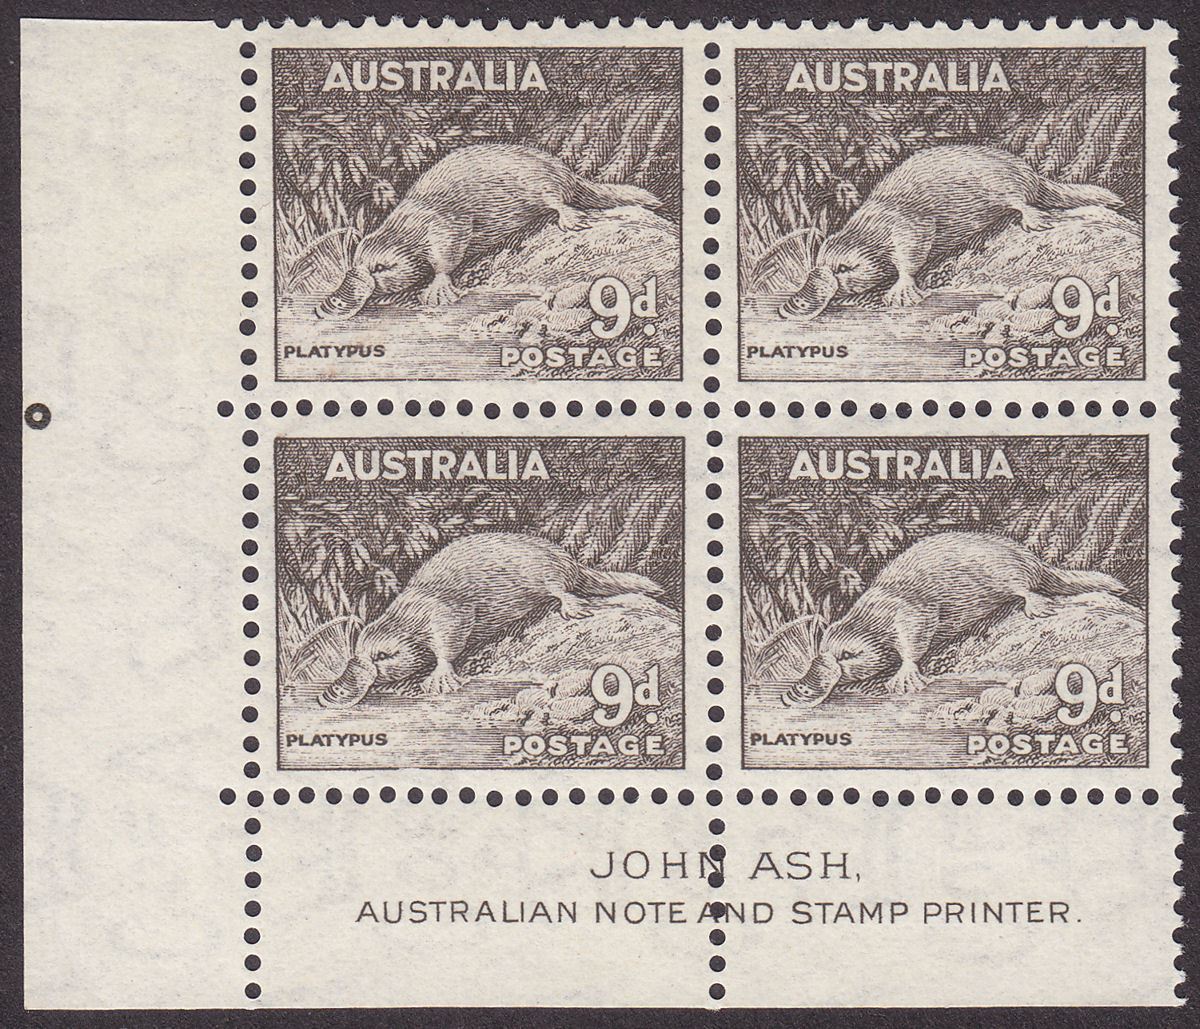 Australia 1938 KGVI Platypus 9d Chocolate Imprint Block of 4 Mint SG173 cat £36